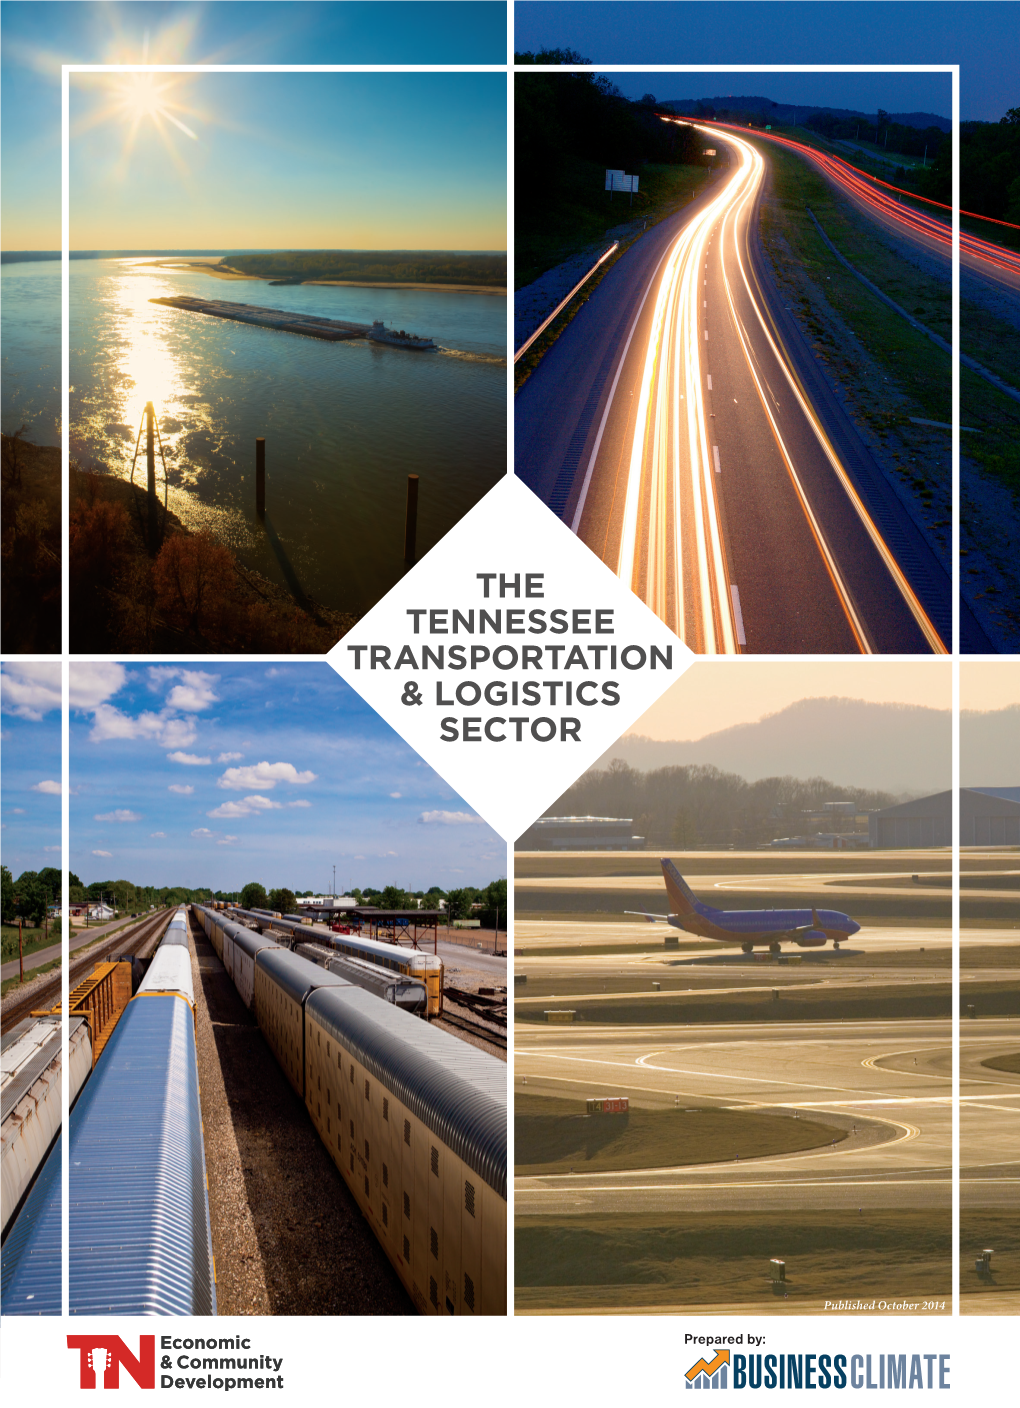 The Tennessee Transportation & Logistics